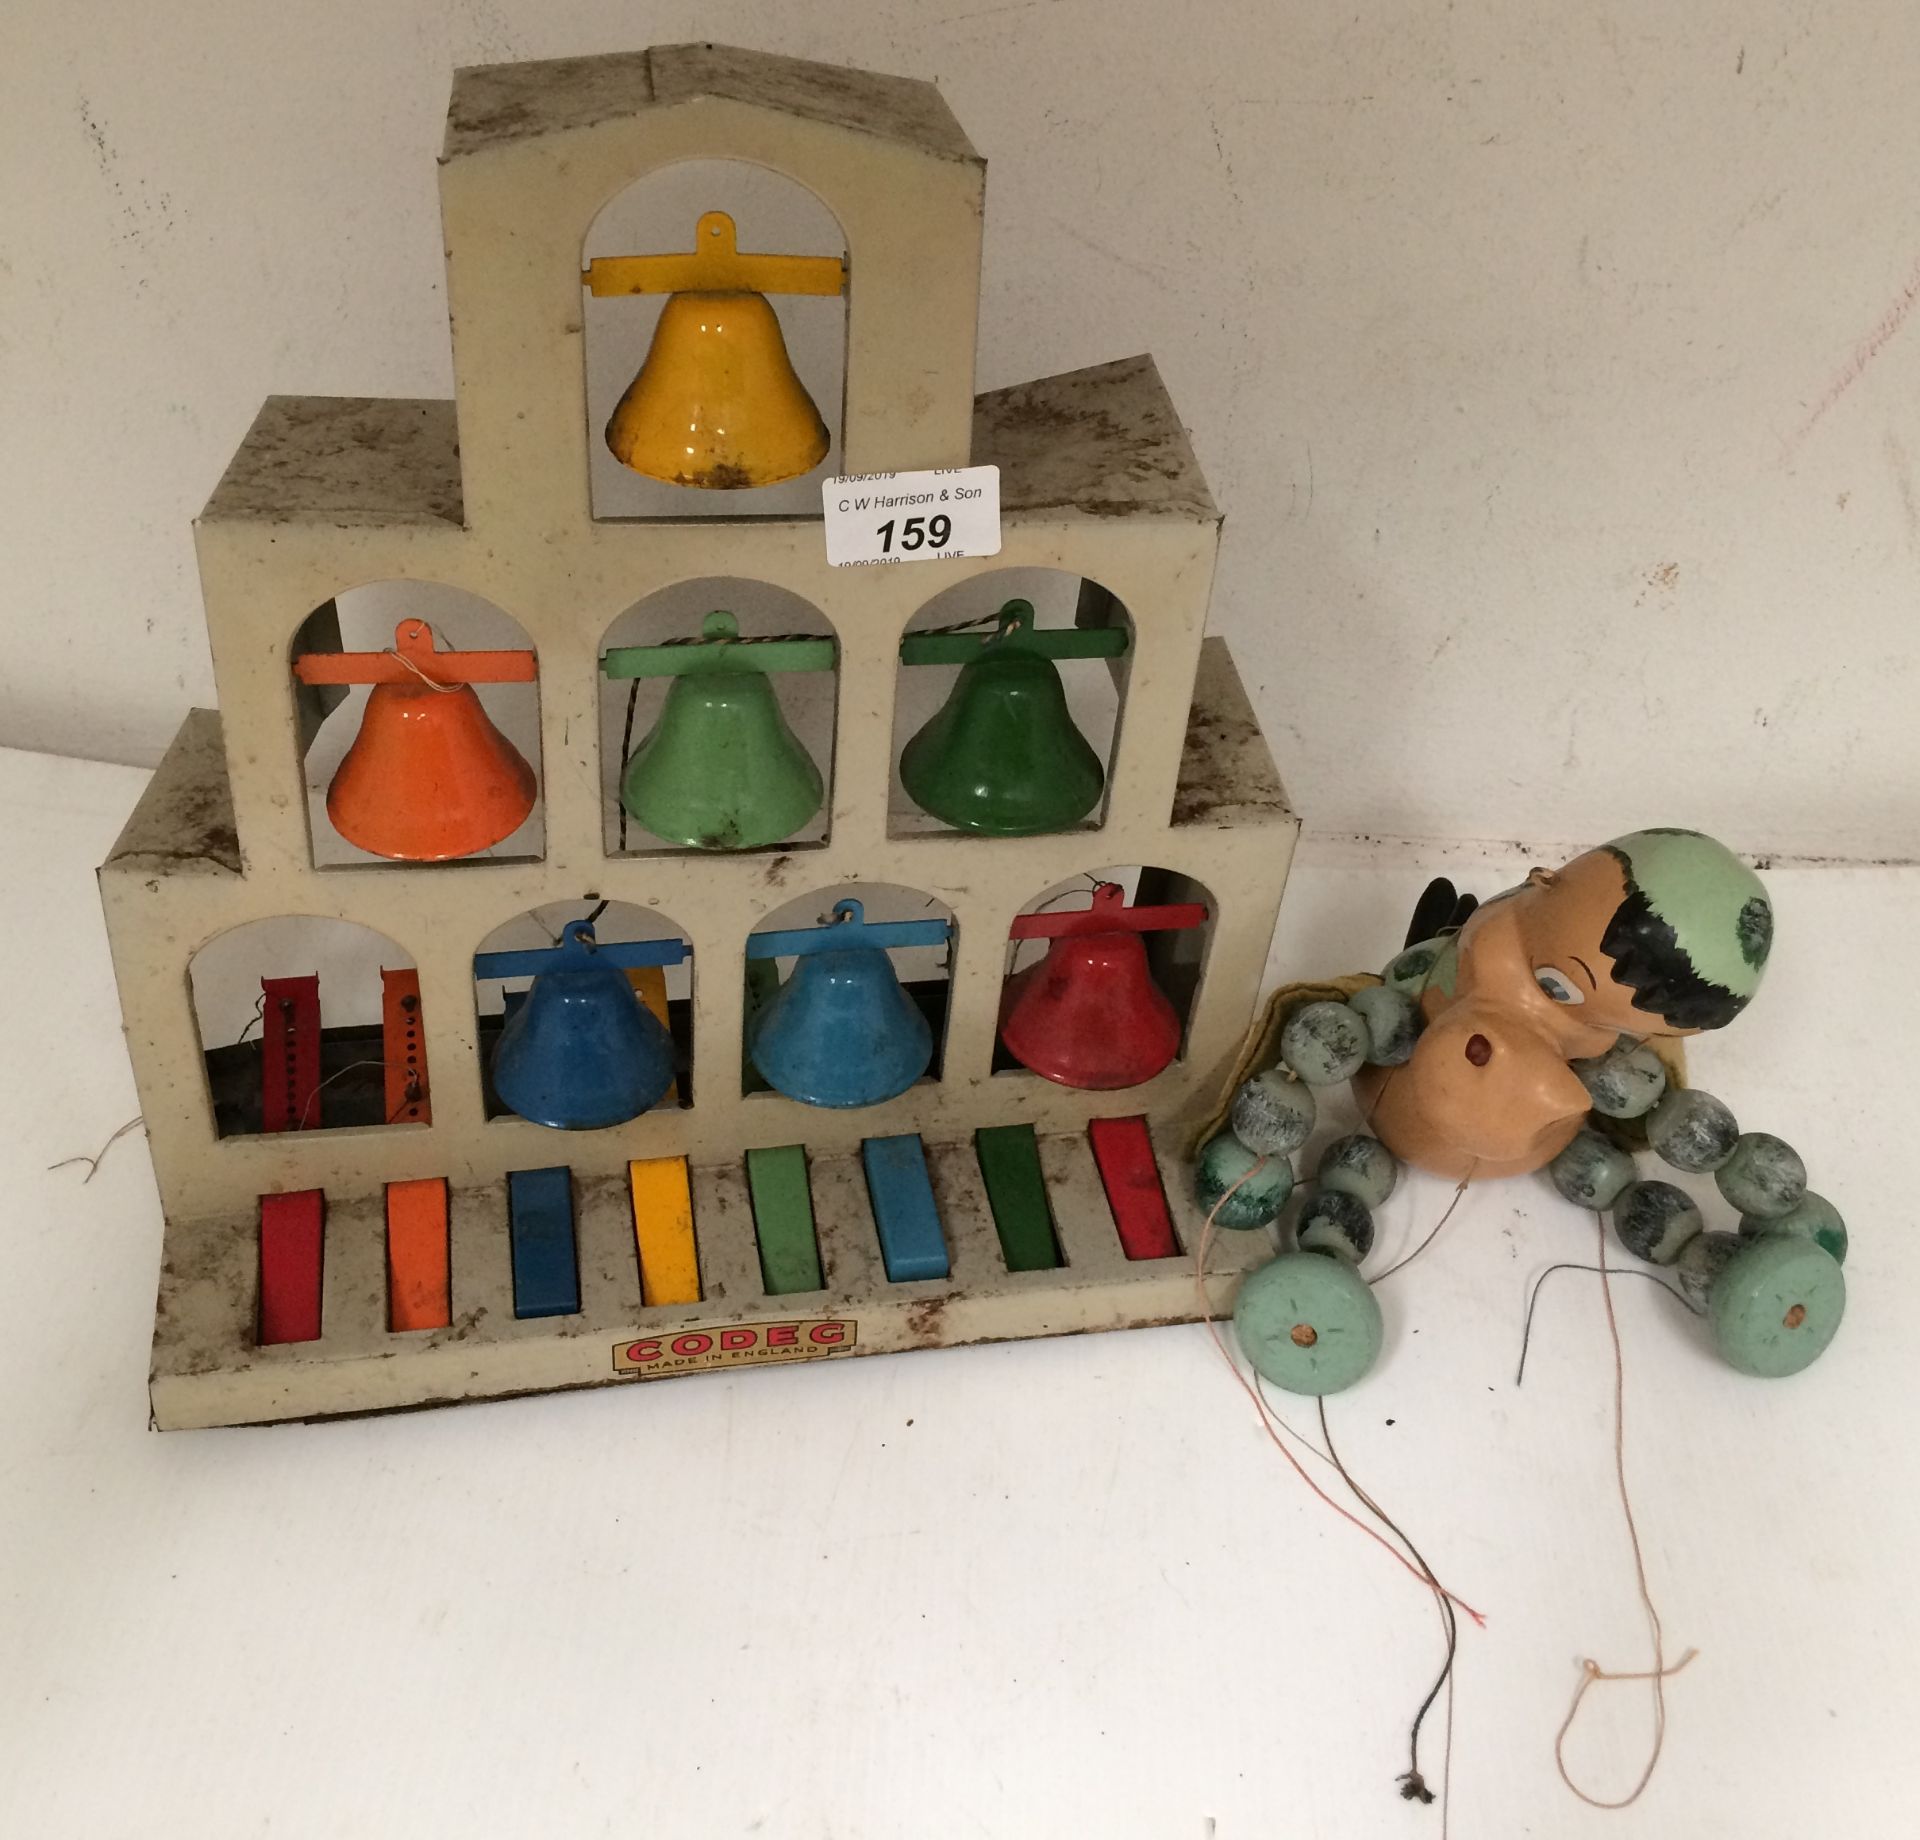 2 x items - Codeg tin plate music bells and wooden string puppet